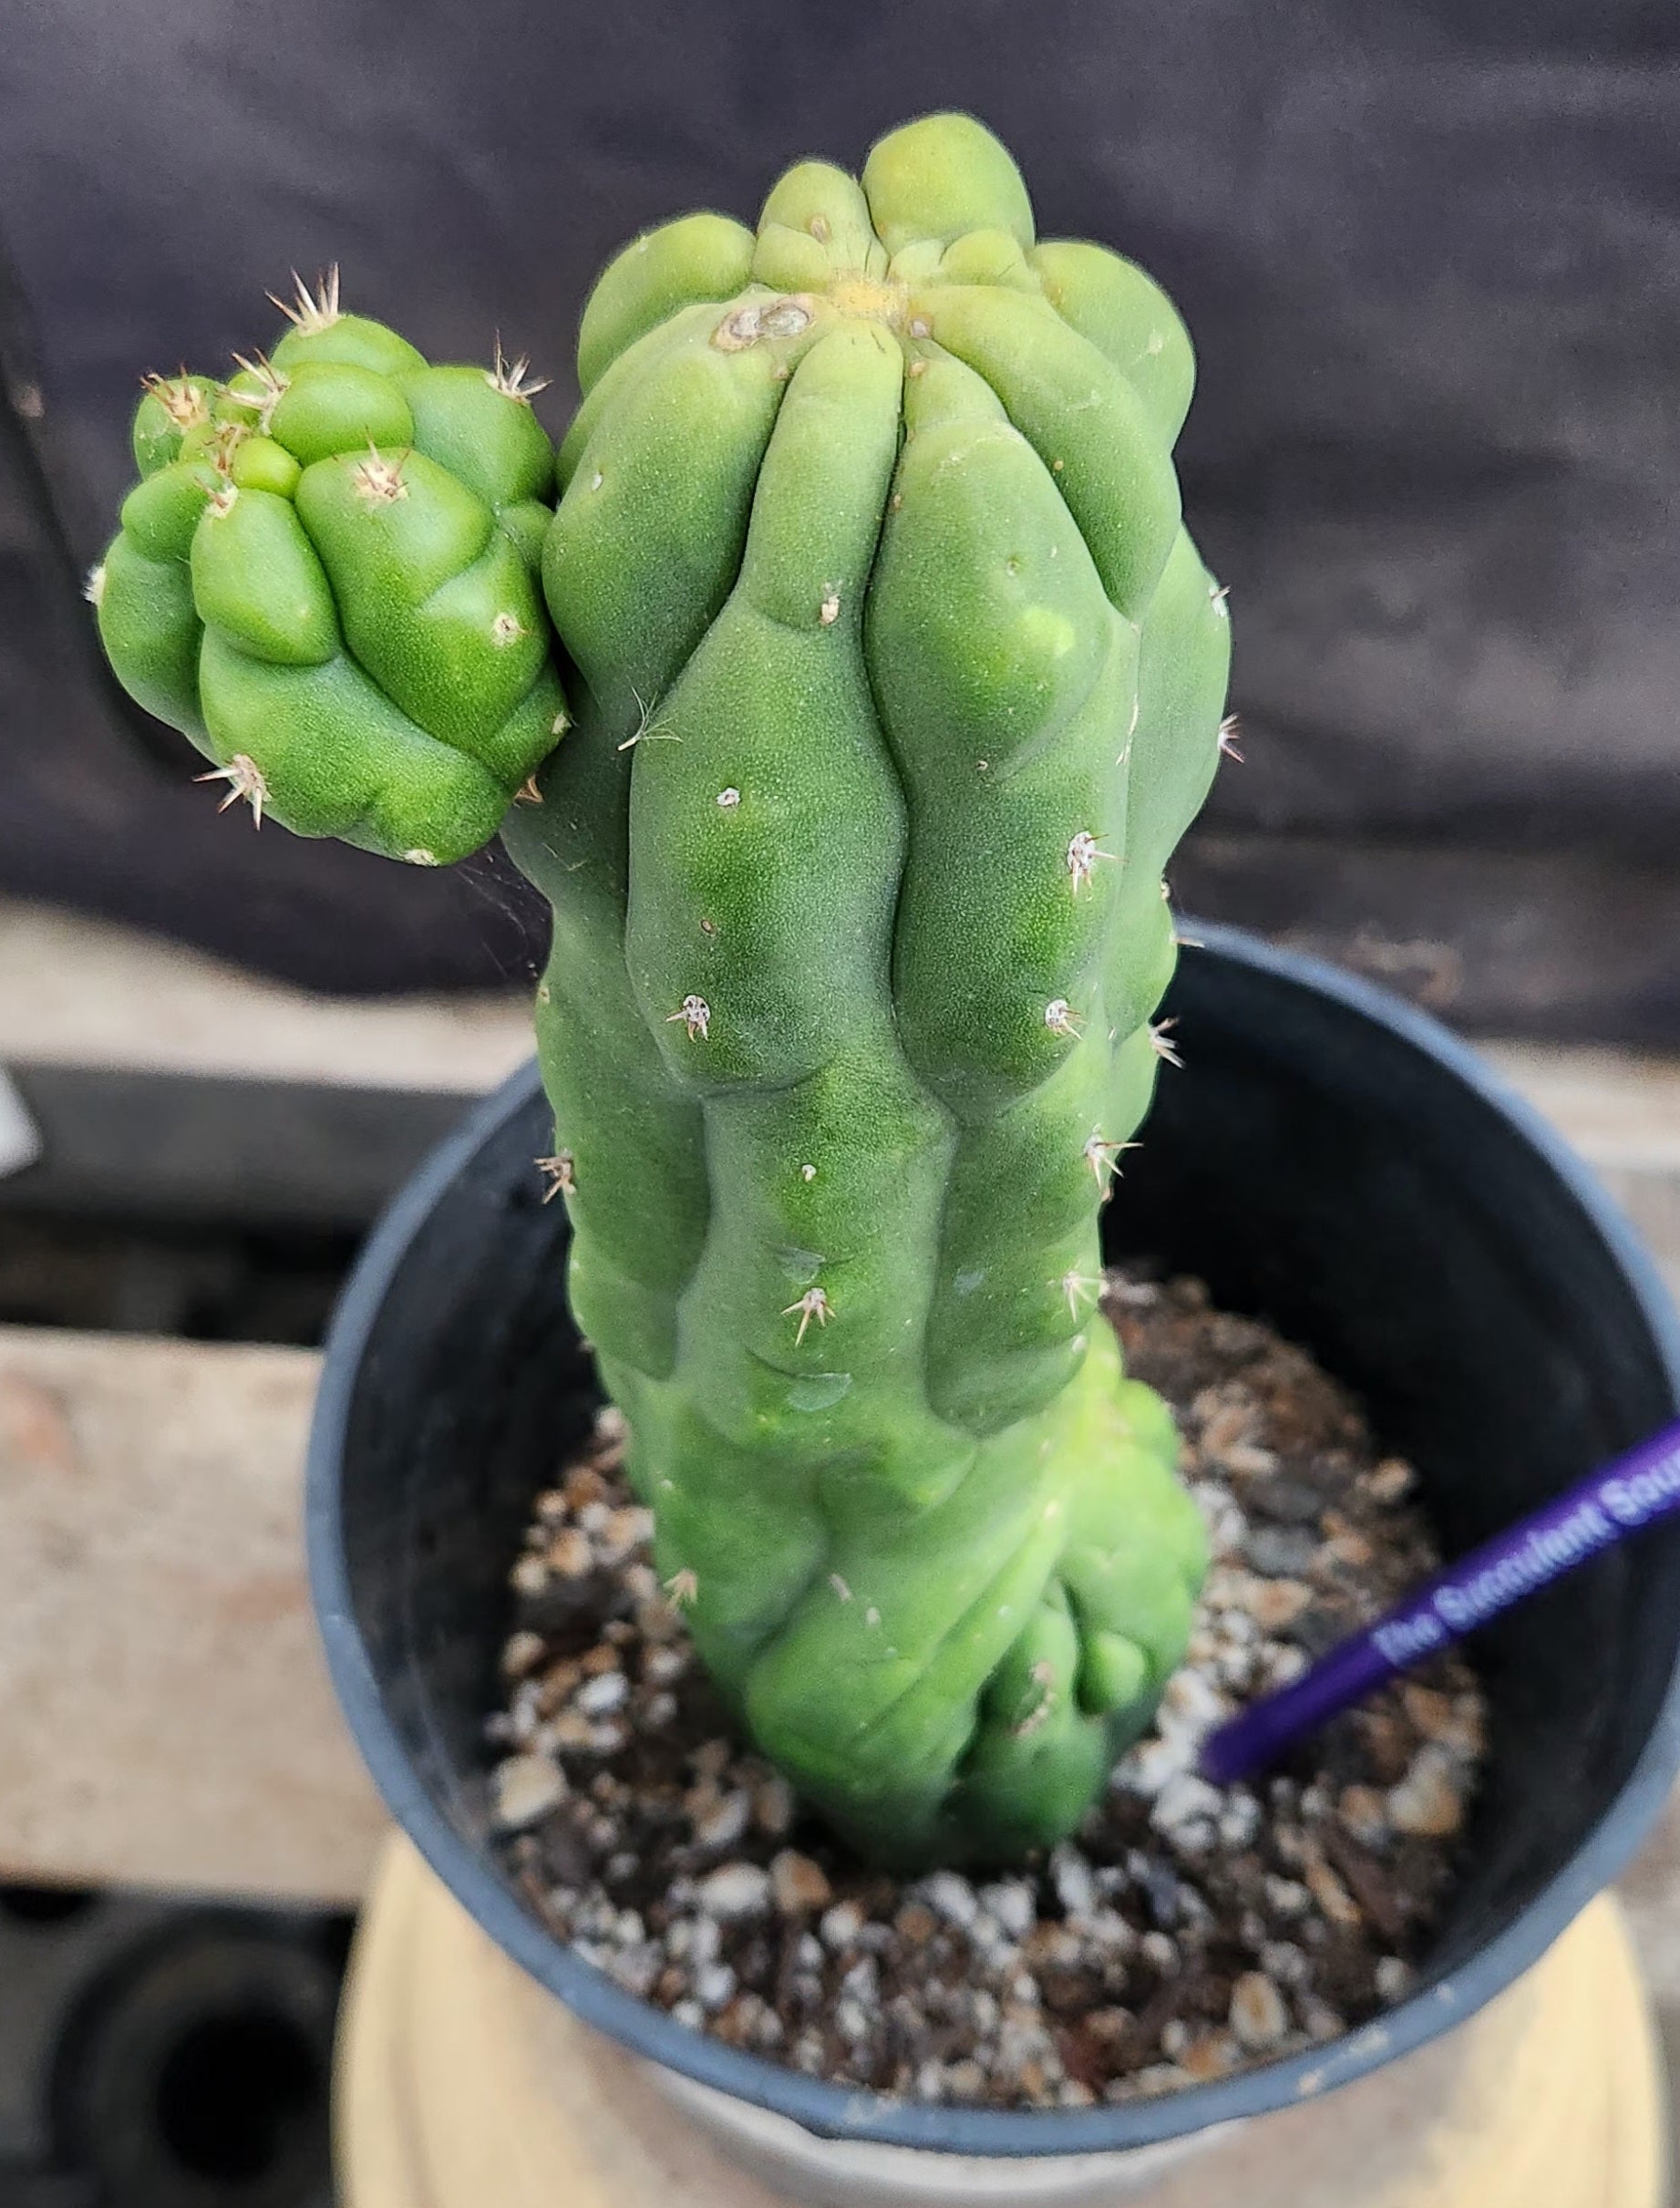 #EC169 EXACT Trichocereus Pachanoi Monstrose TPM Cactus 9.5”-Cactus - Large - Exact-The Succulent Source